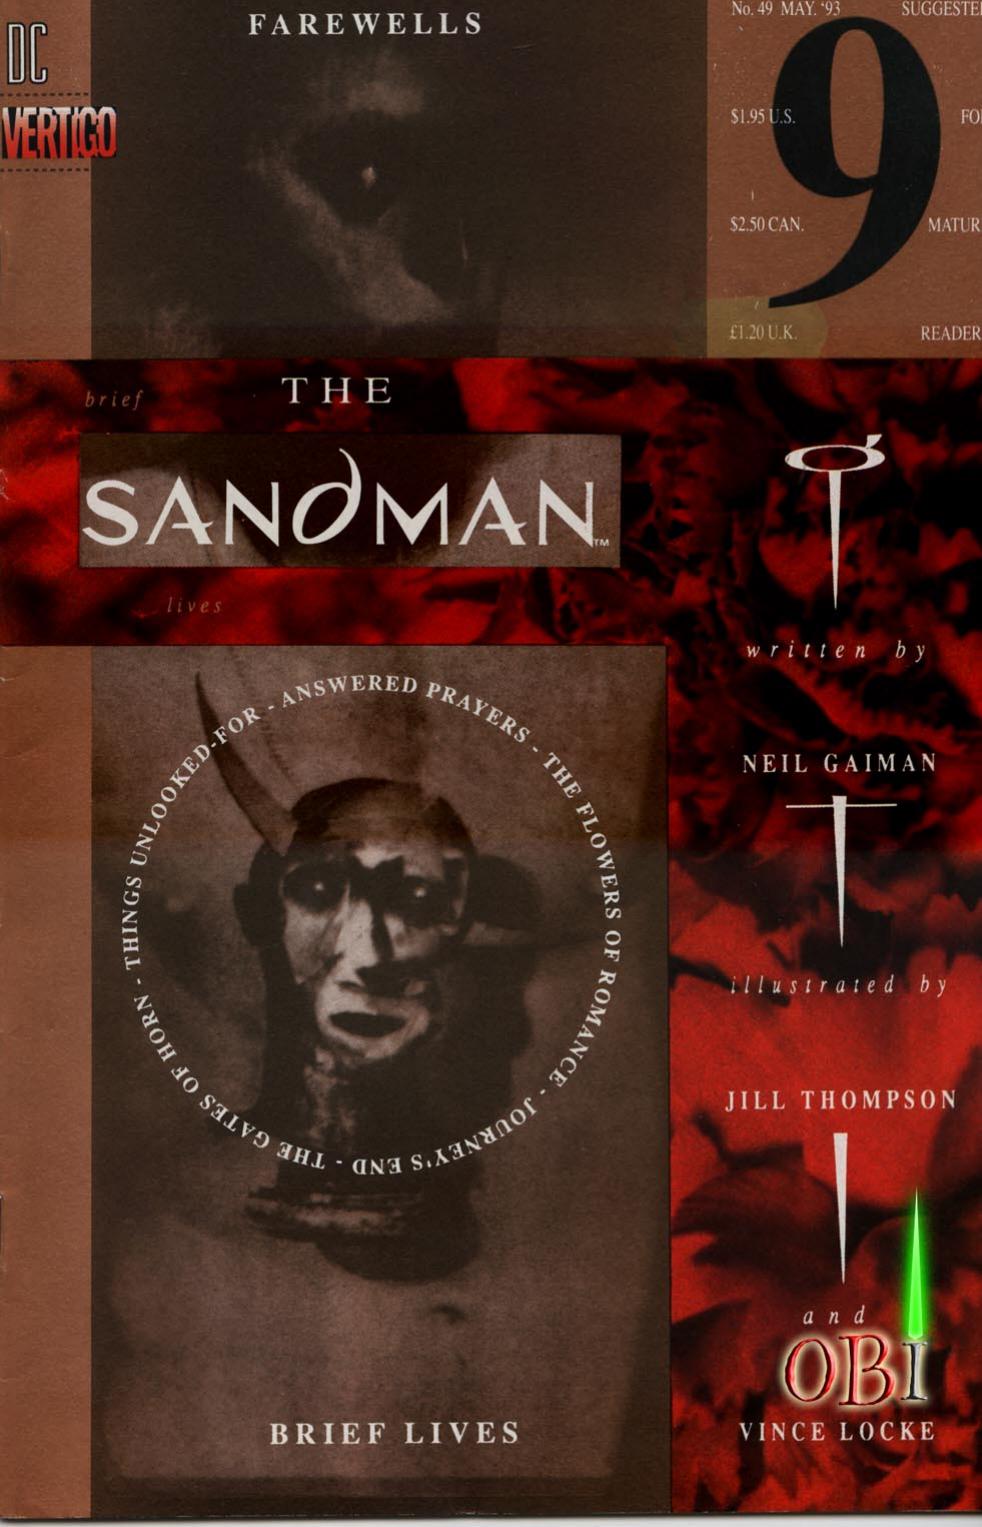 The Sandman #49: Brief Lives Part 9